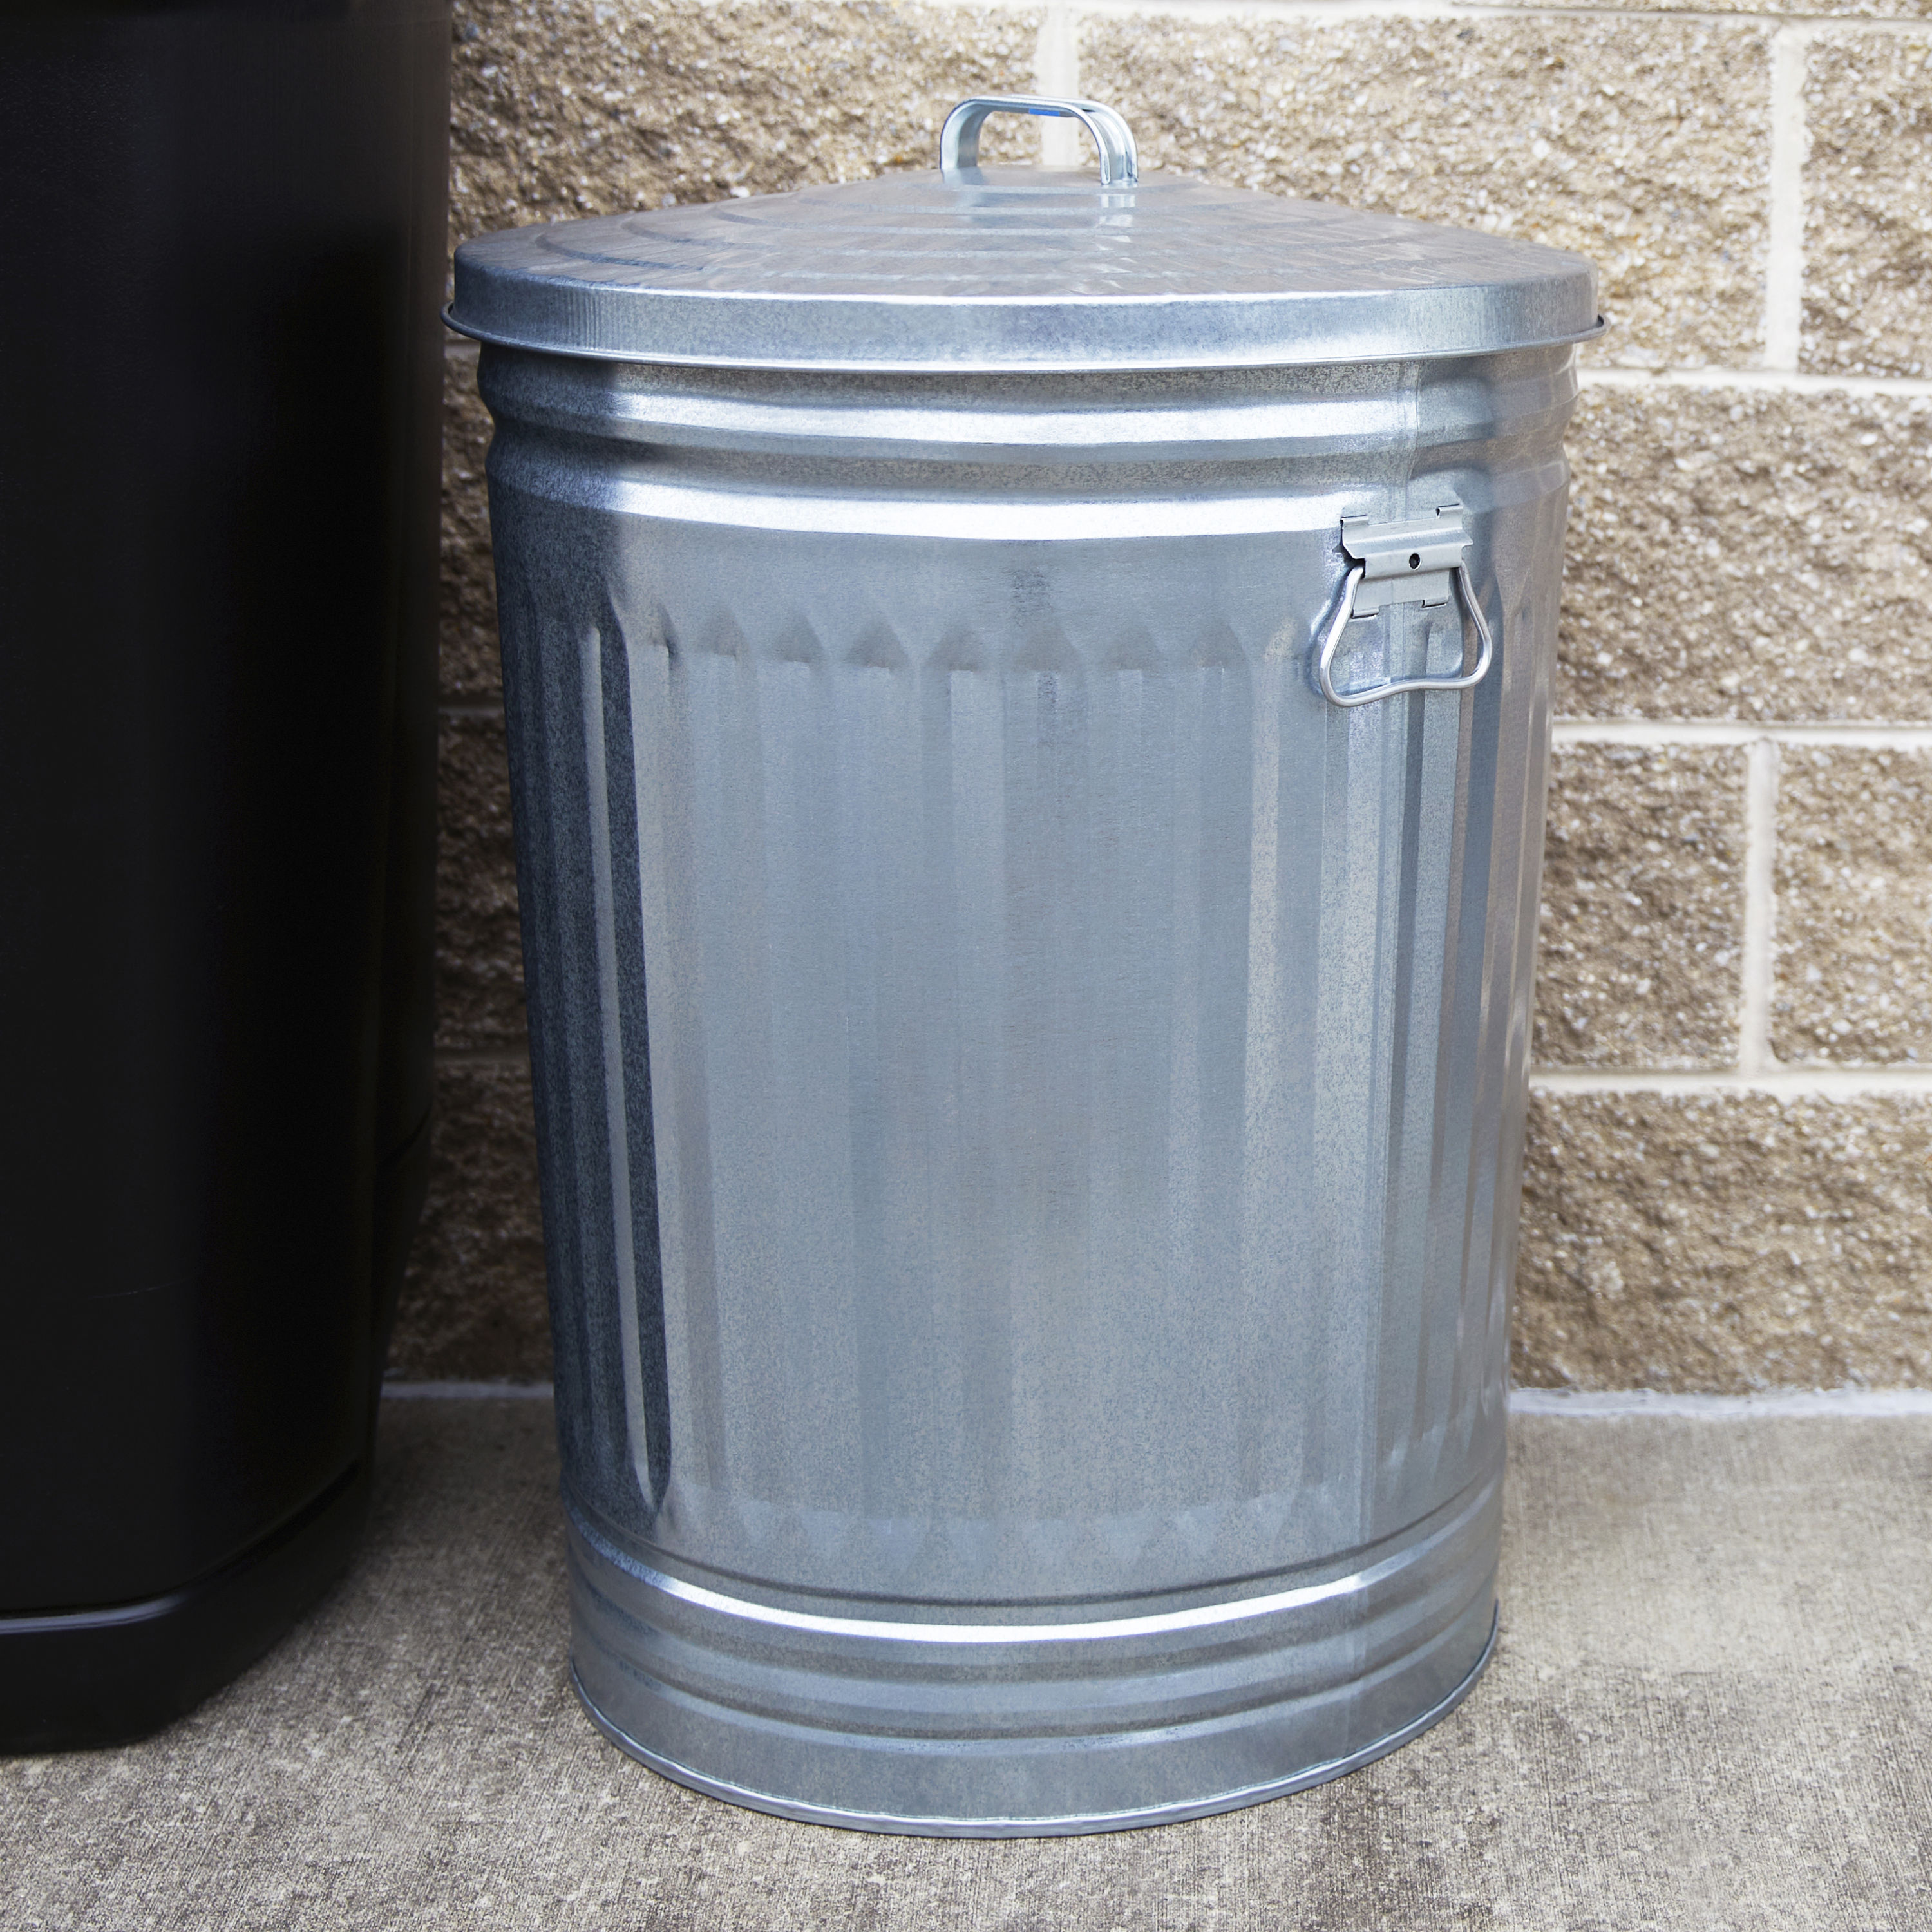 Details about   Decorative Round Rustic Galvanized Metal Wastebasket/Trash Can/Garbage/Bucket 